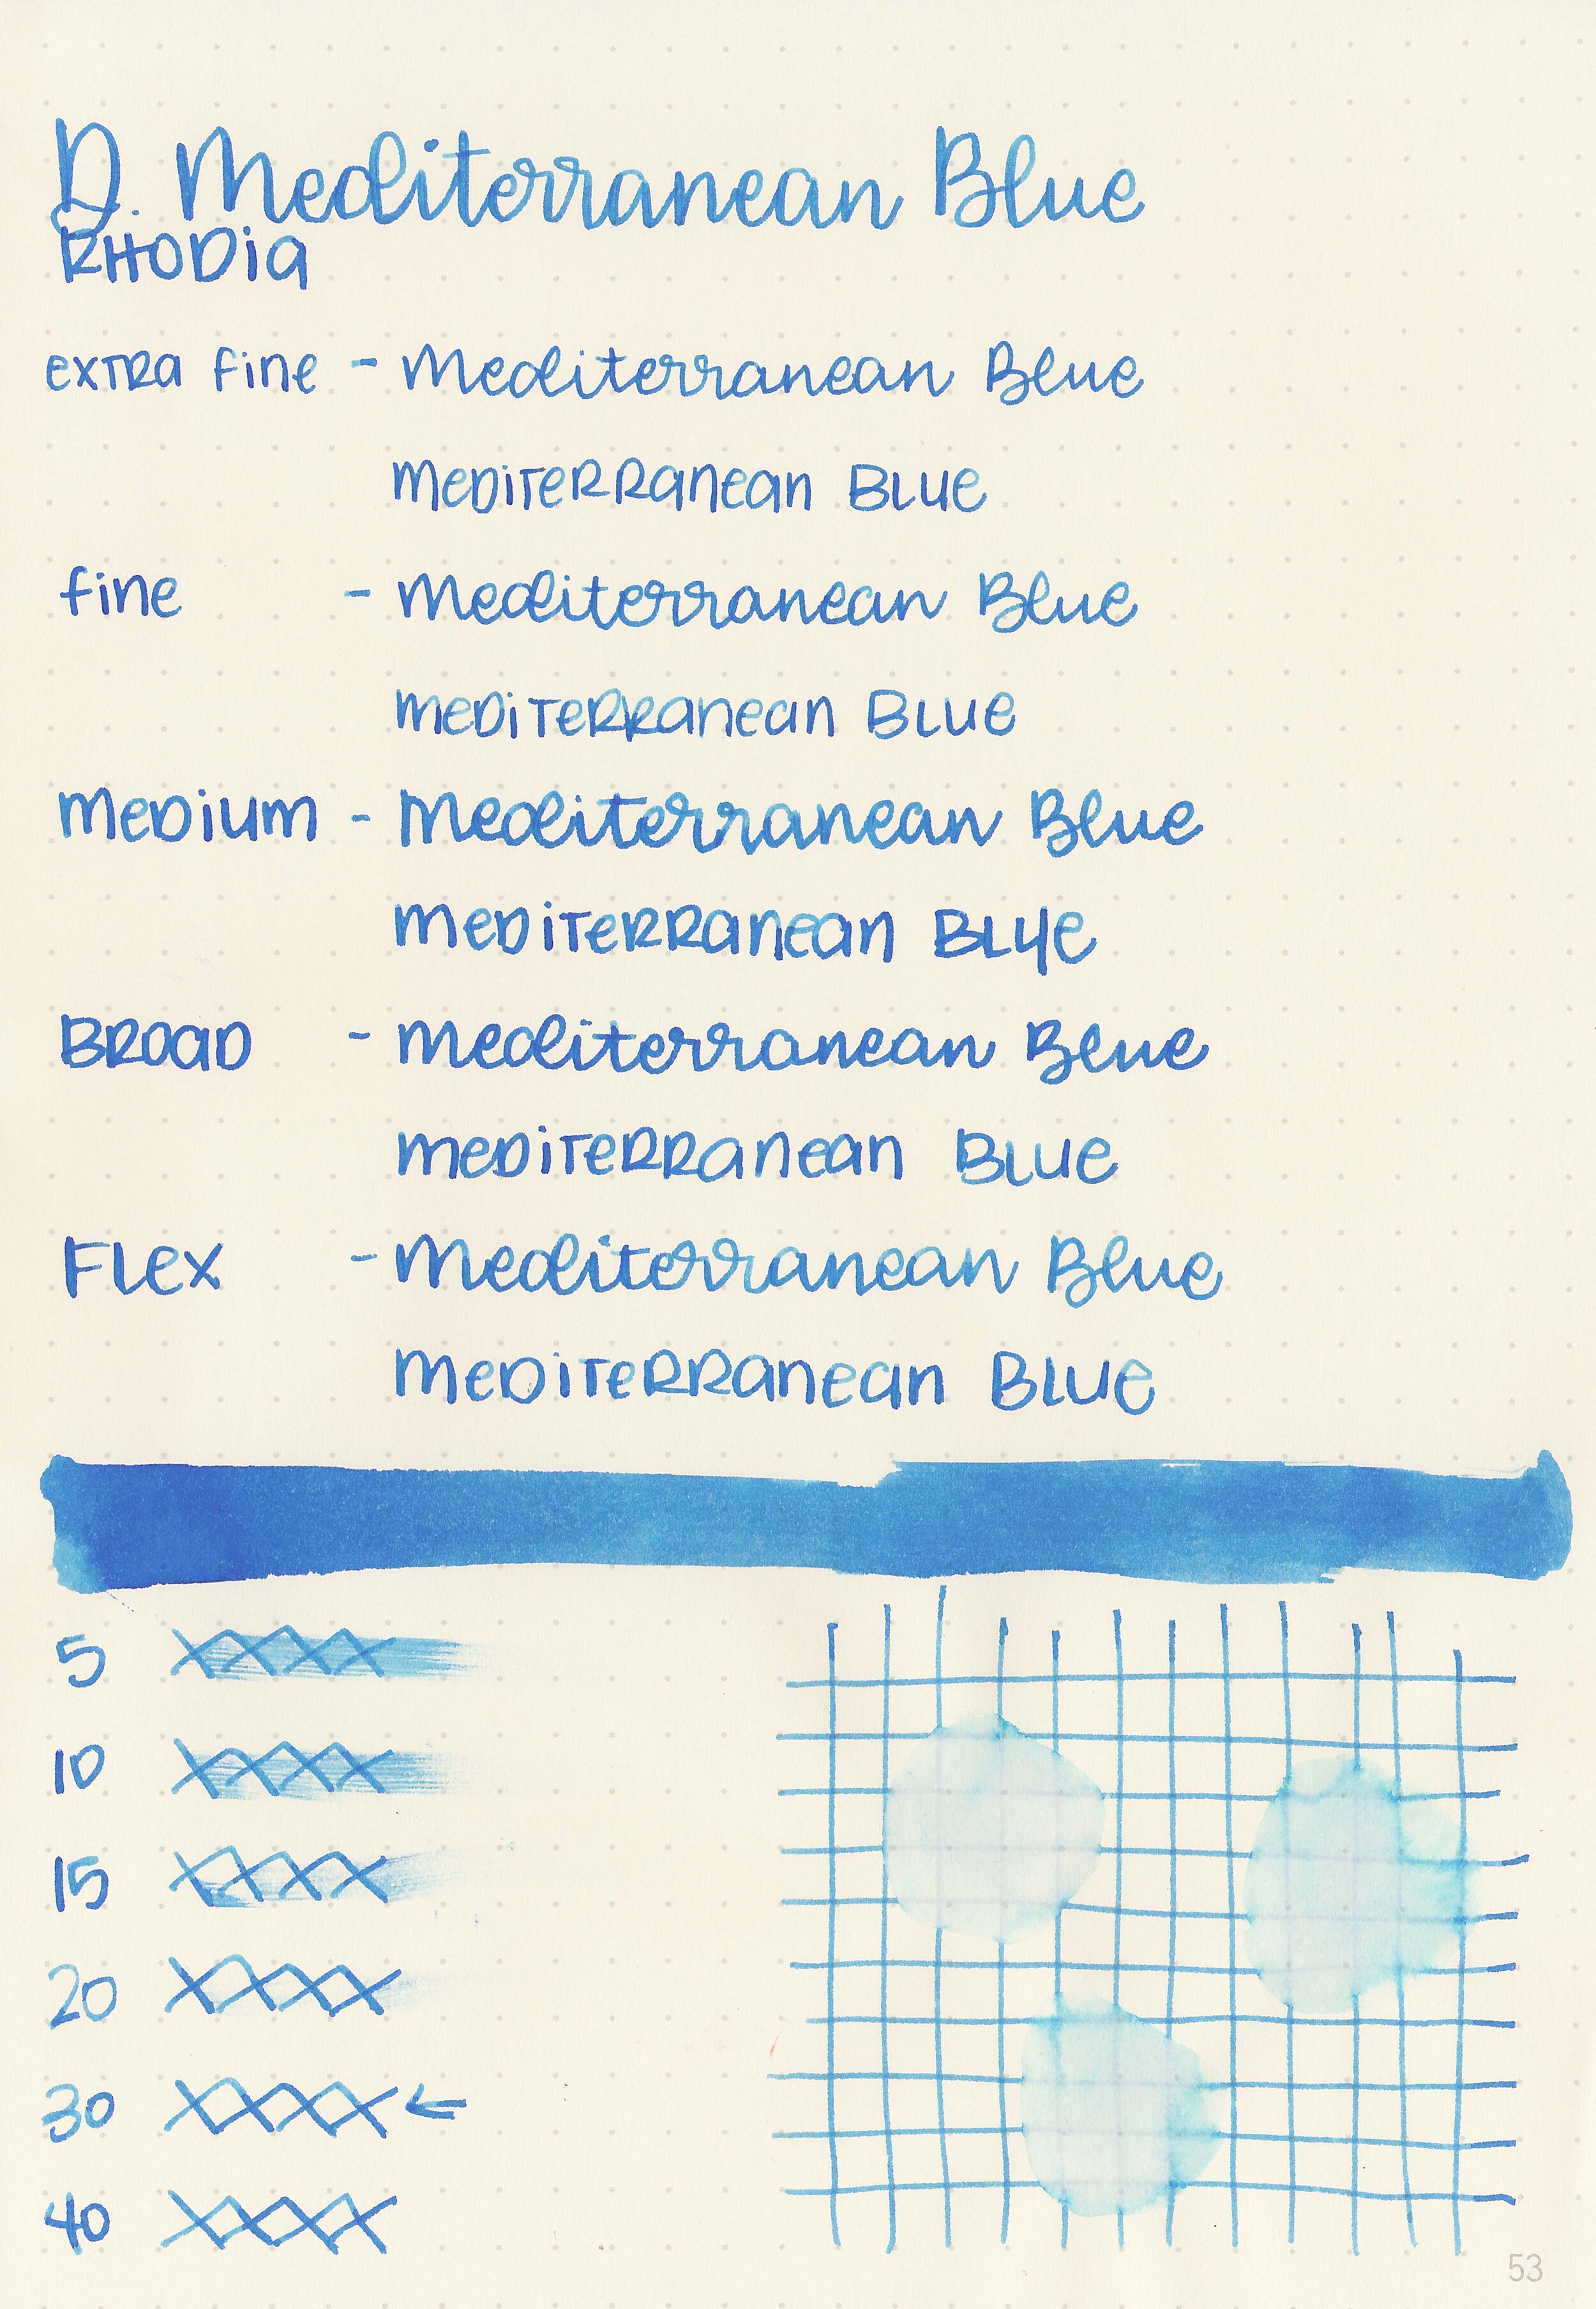 d-mediterranean-blue-5.jpg